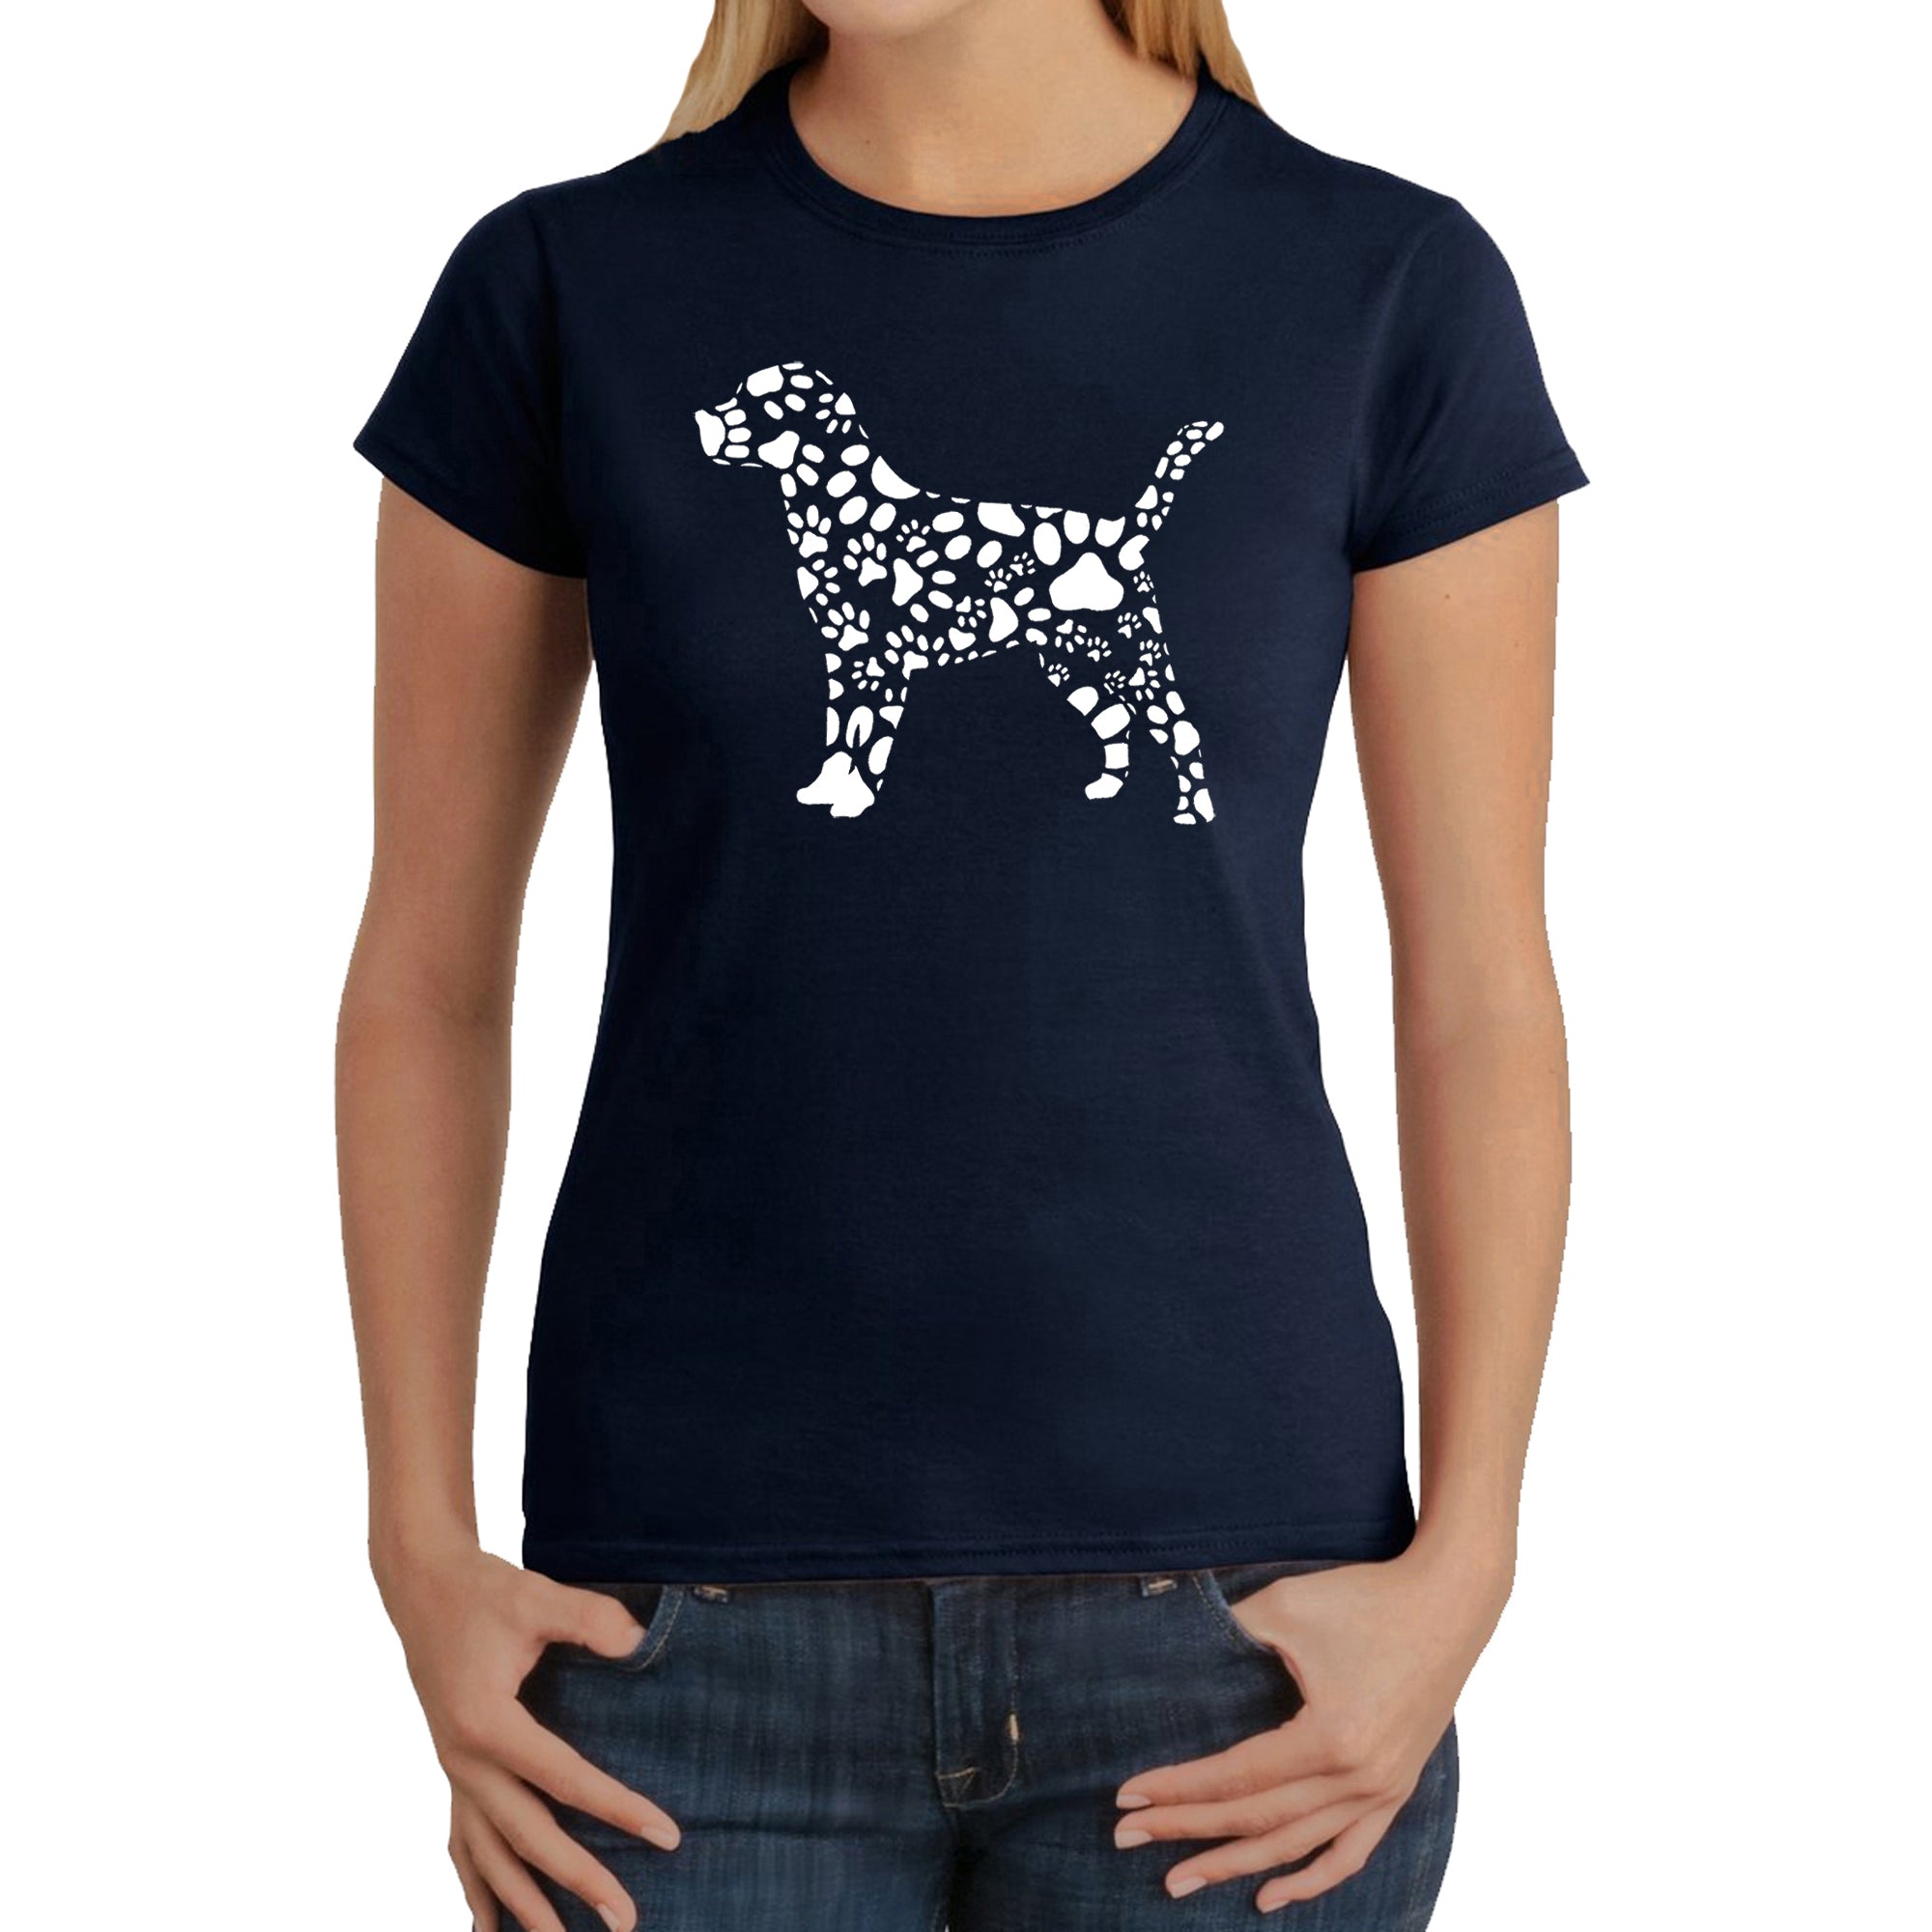 Dog Paw Prints - Women's Word Art T-Shirt - Navy - XX-Large